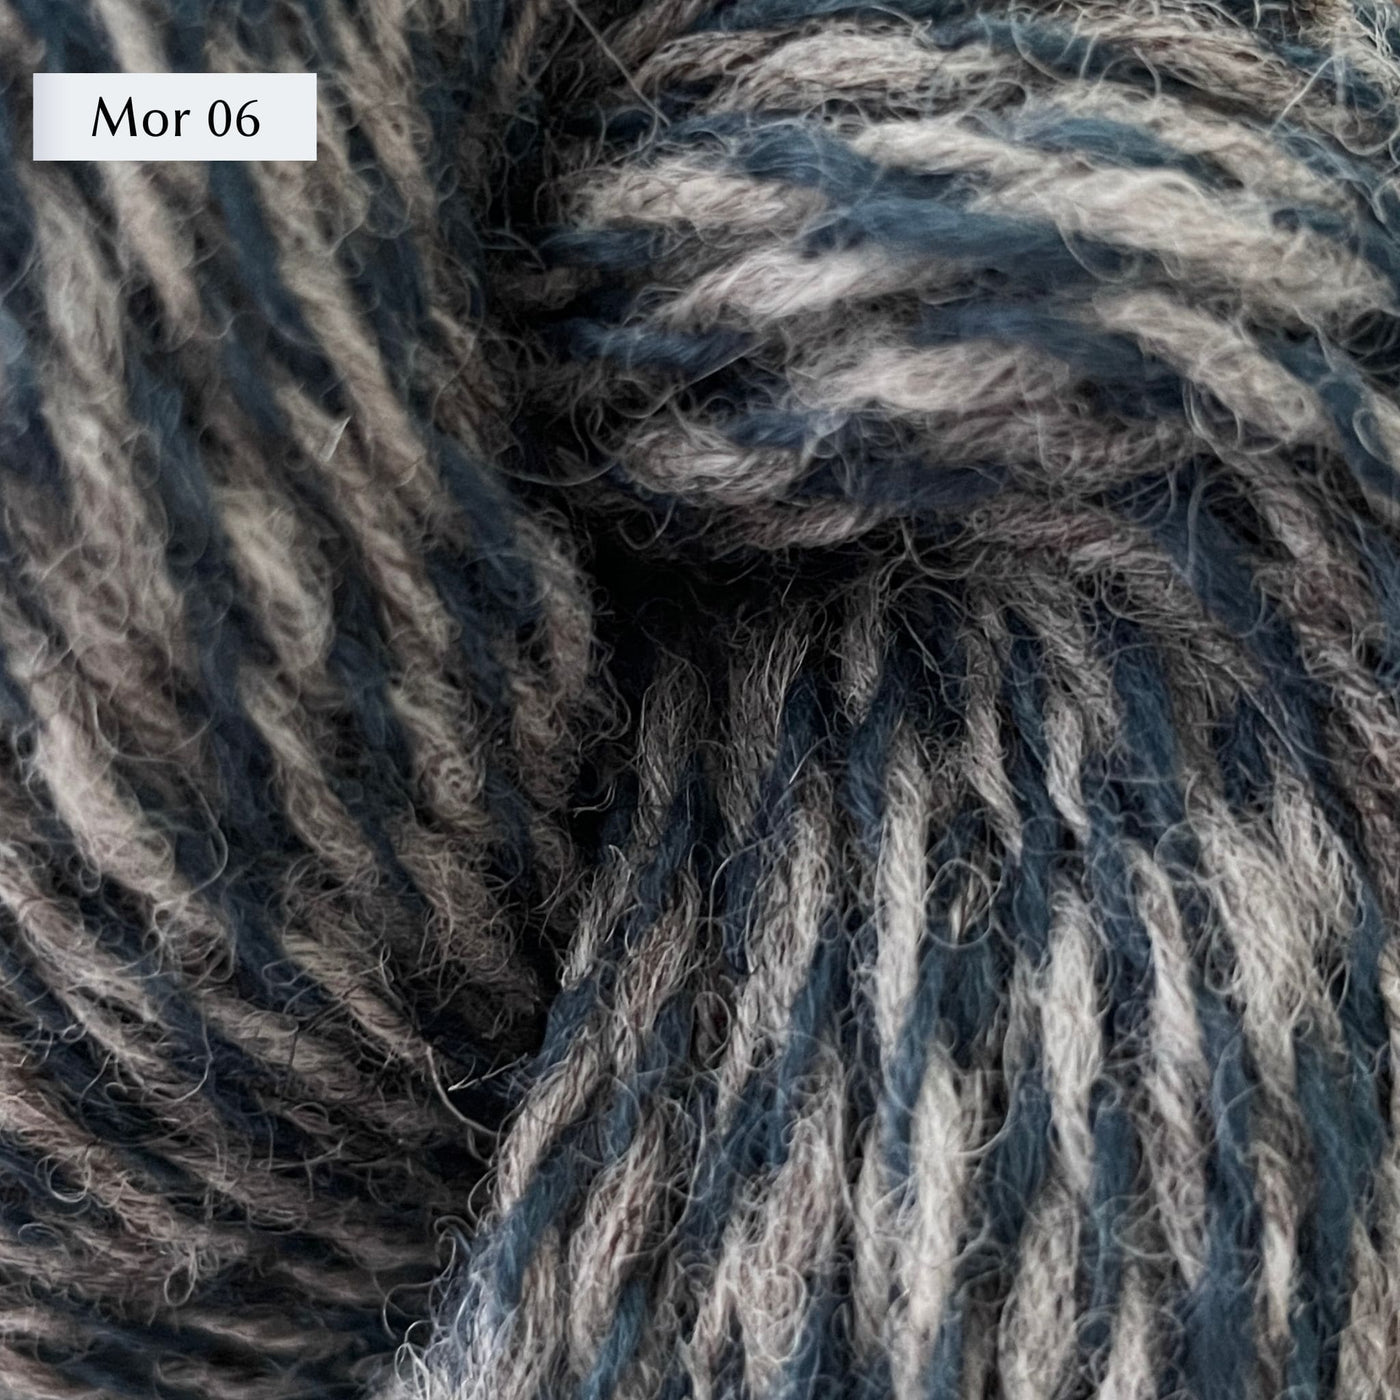 Garthenor Teifi, a sport weight marled yarn, in color Mor 06, a marl of heathered grey and a dark denim blue